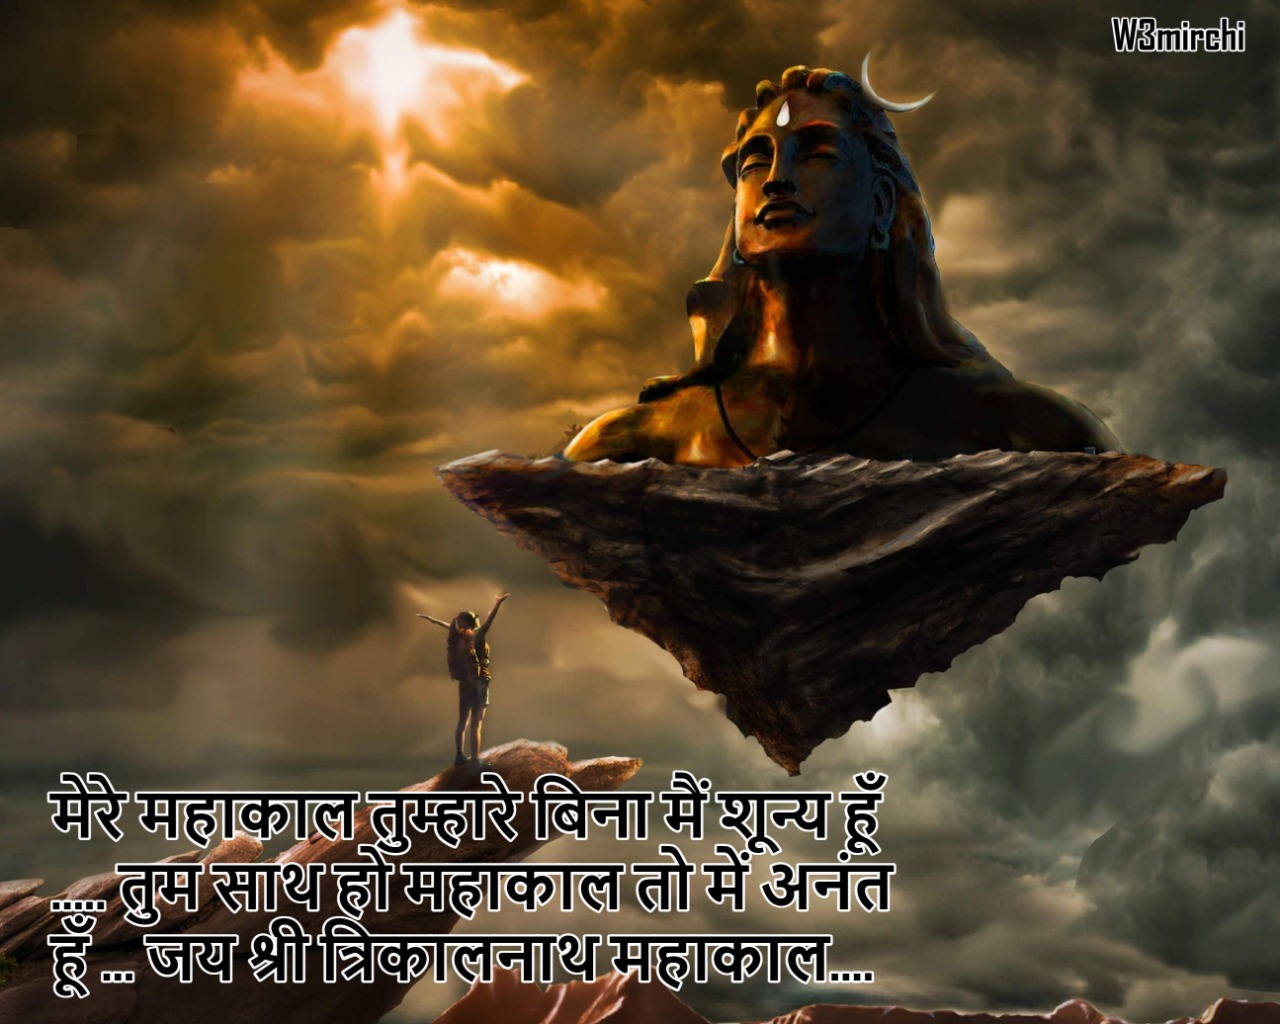 HAPPY MAHASHIVRATRI - Lord Shiva DP And Images